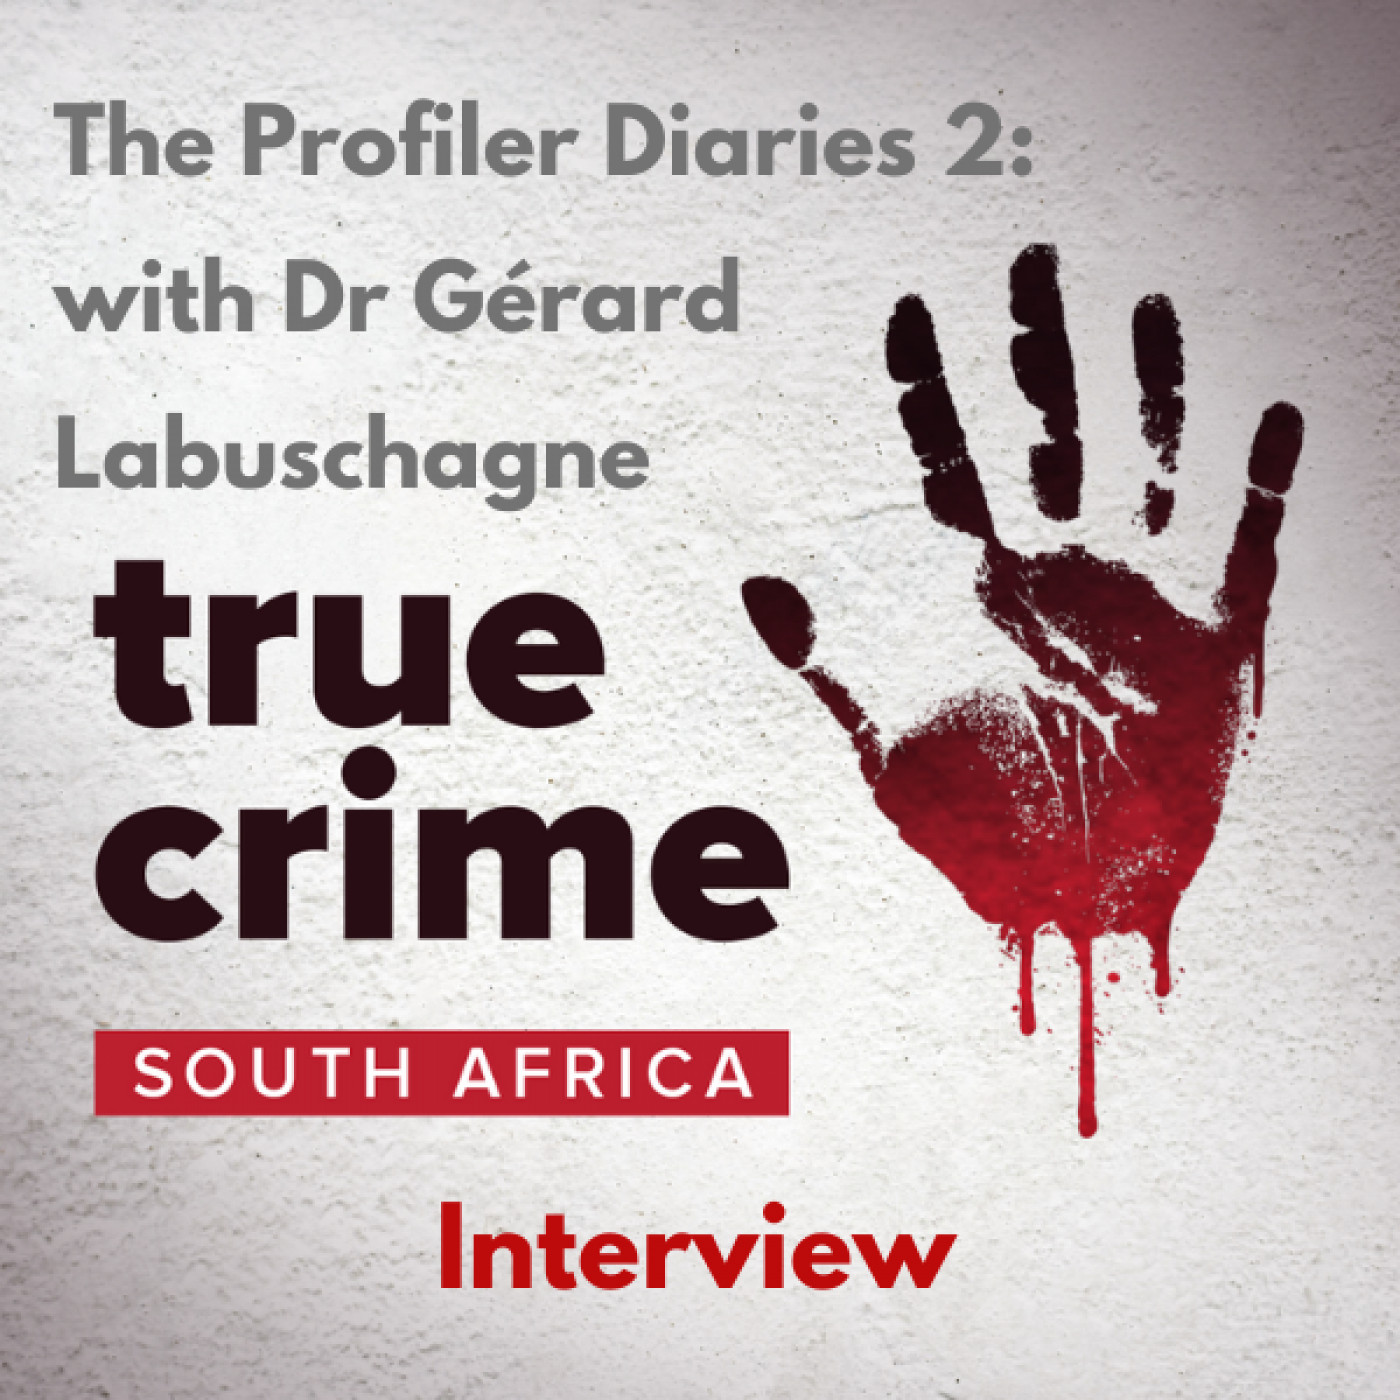 The Profiler Diaries 2: Interview with Dr Gérard Labuschagne